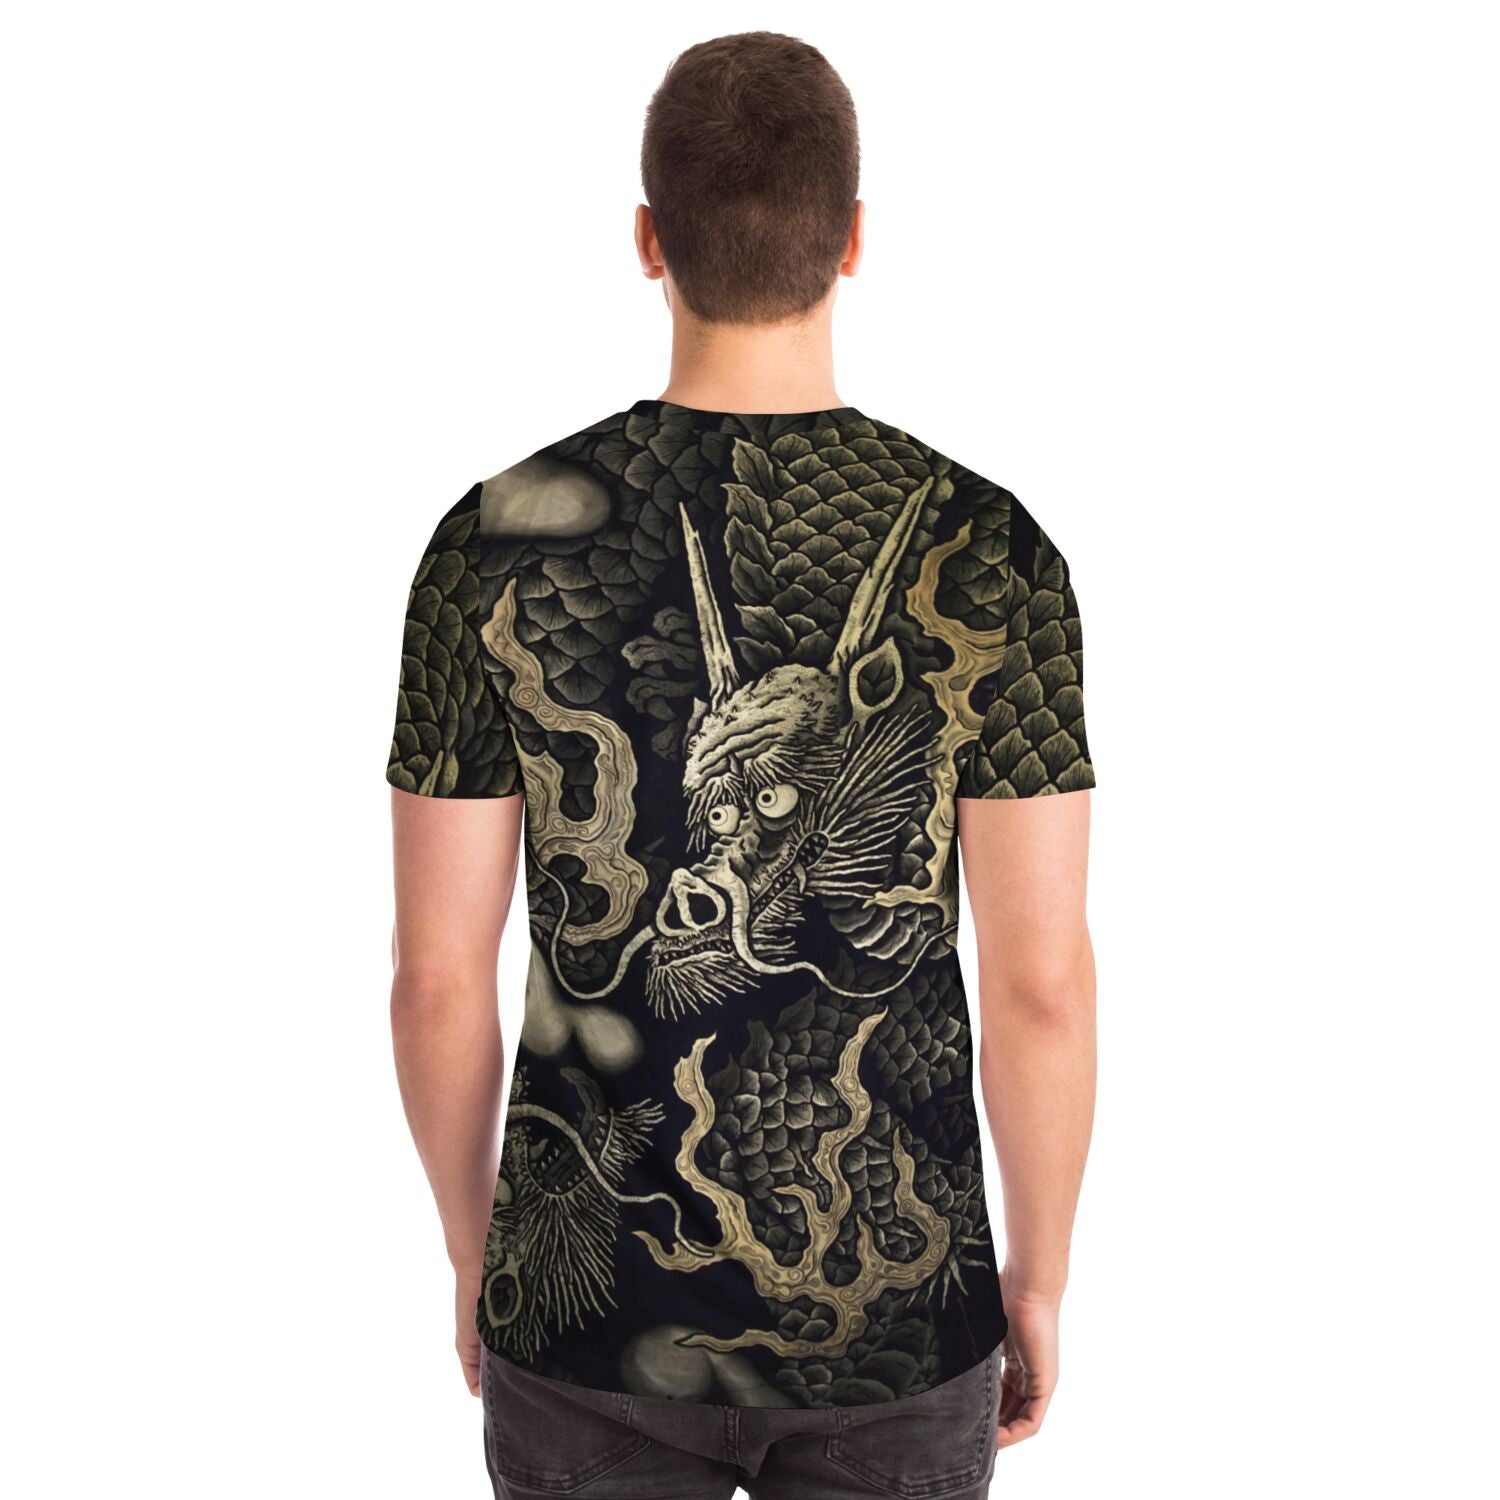 Zen Gold Dragons: Kennin-ji 1202 AD Temple Art | Kyoto Japan Zazen Zendo | Serpent Snake Vintage All-Over-Print T-shirt - Sacred Surreal